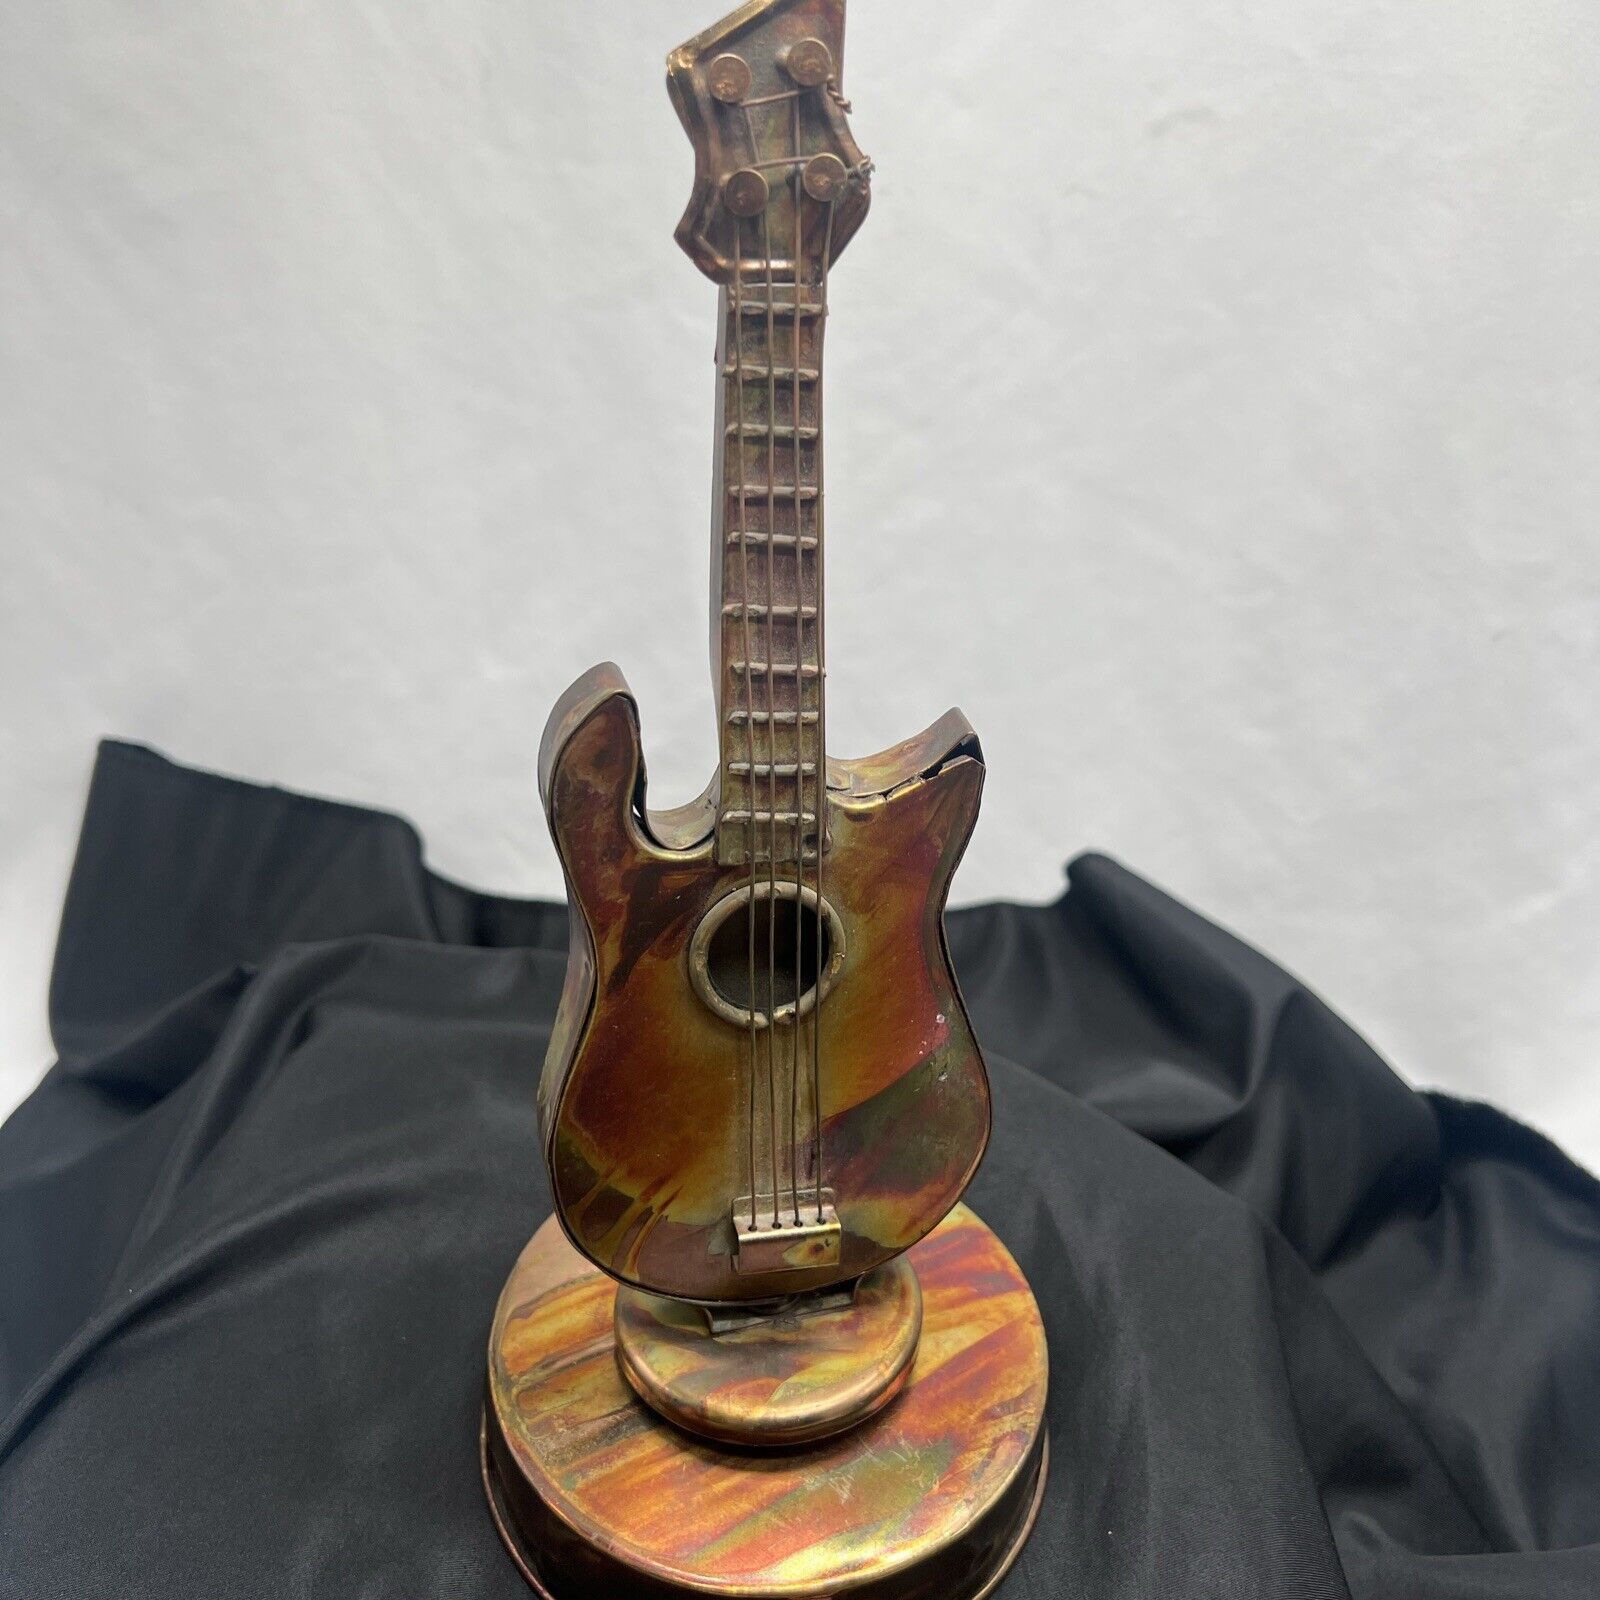 Vtg Berkeley Designs Metal Copper Wind Up Music Box Guitar Blue Suede Shoes